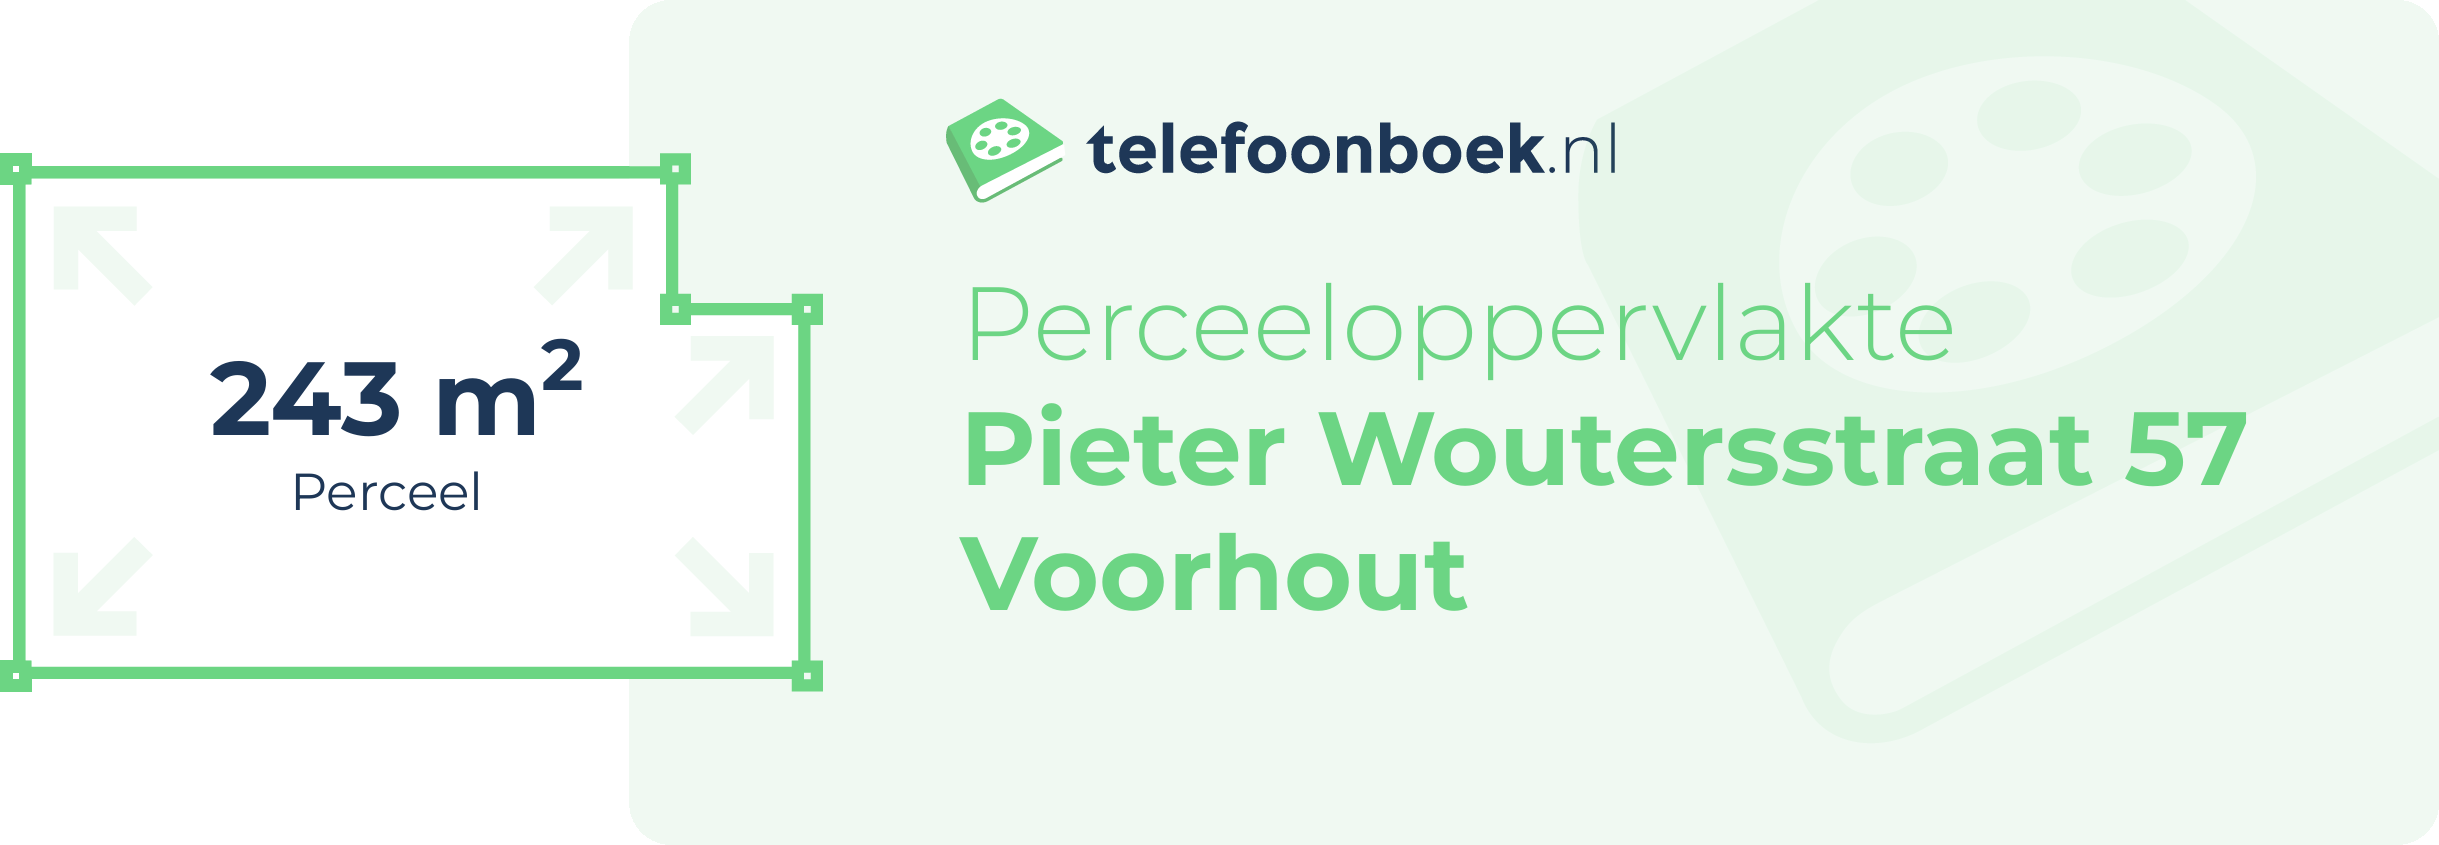 Perceeloppervlakte Pieter Woutersstraat 57 Voorhout